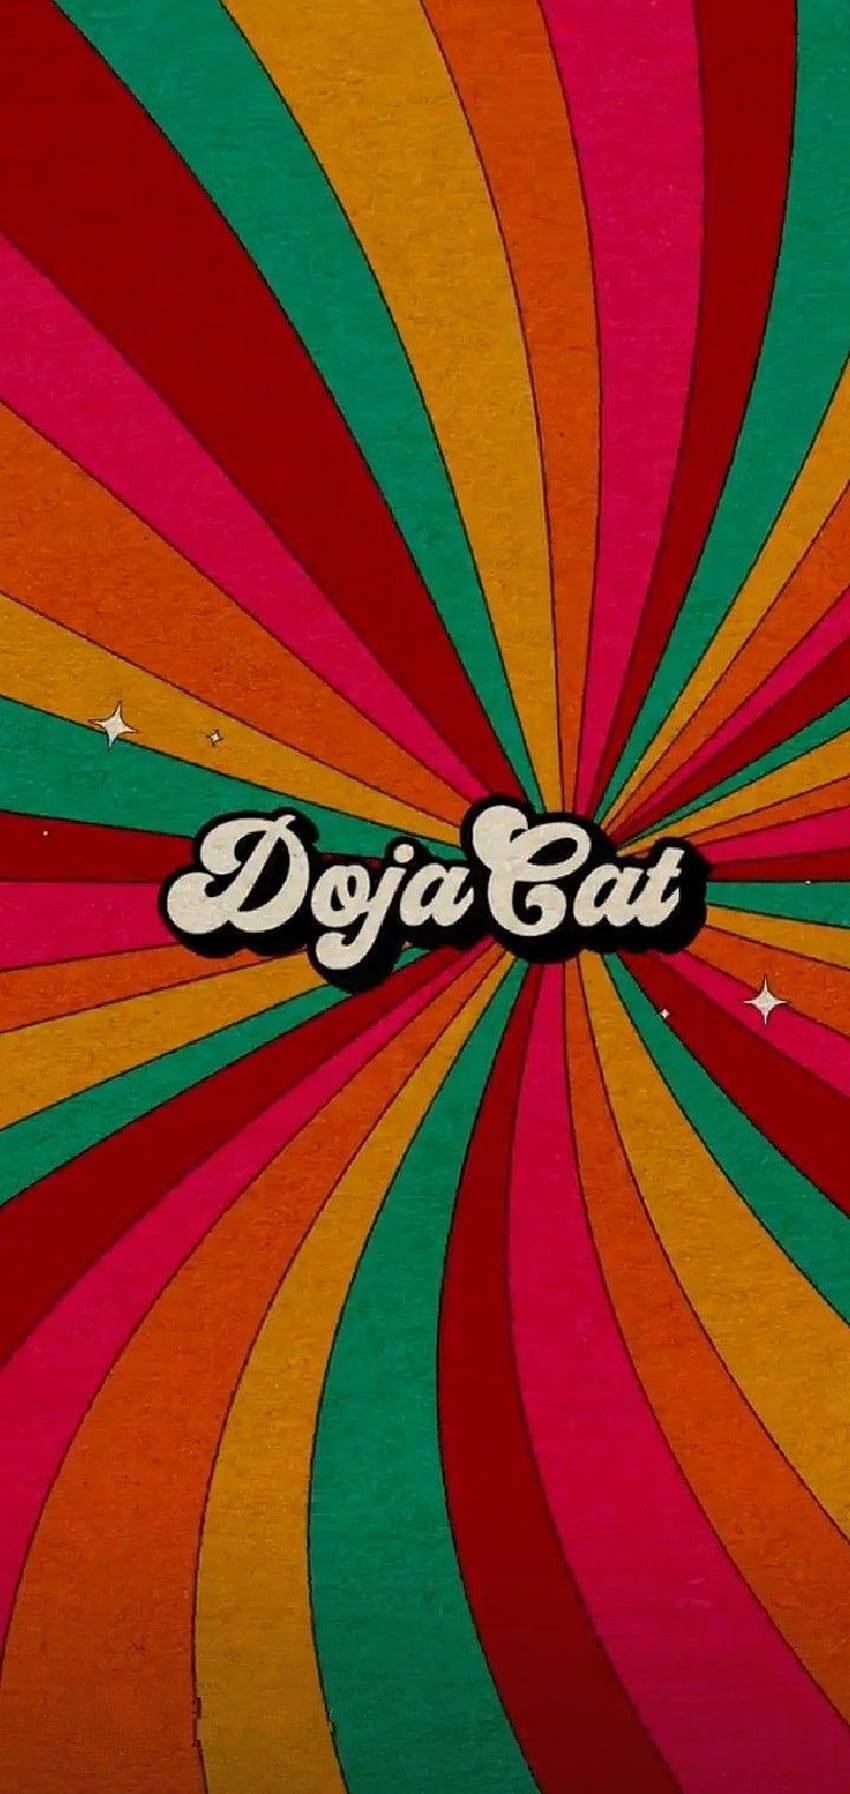 Doga cat logo on a colorful background - Doja Cat